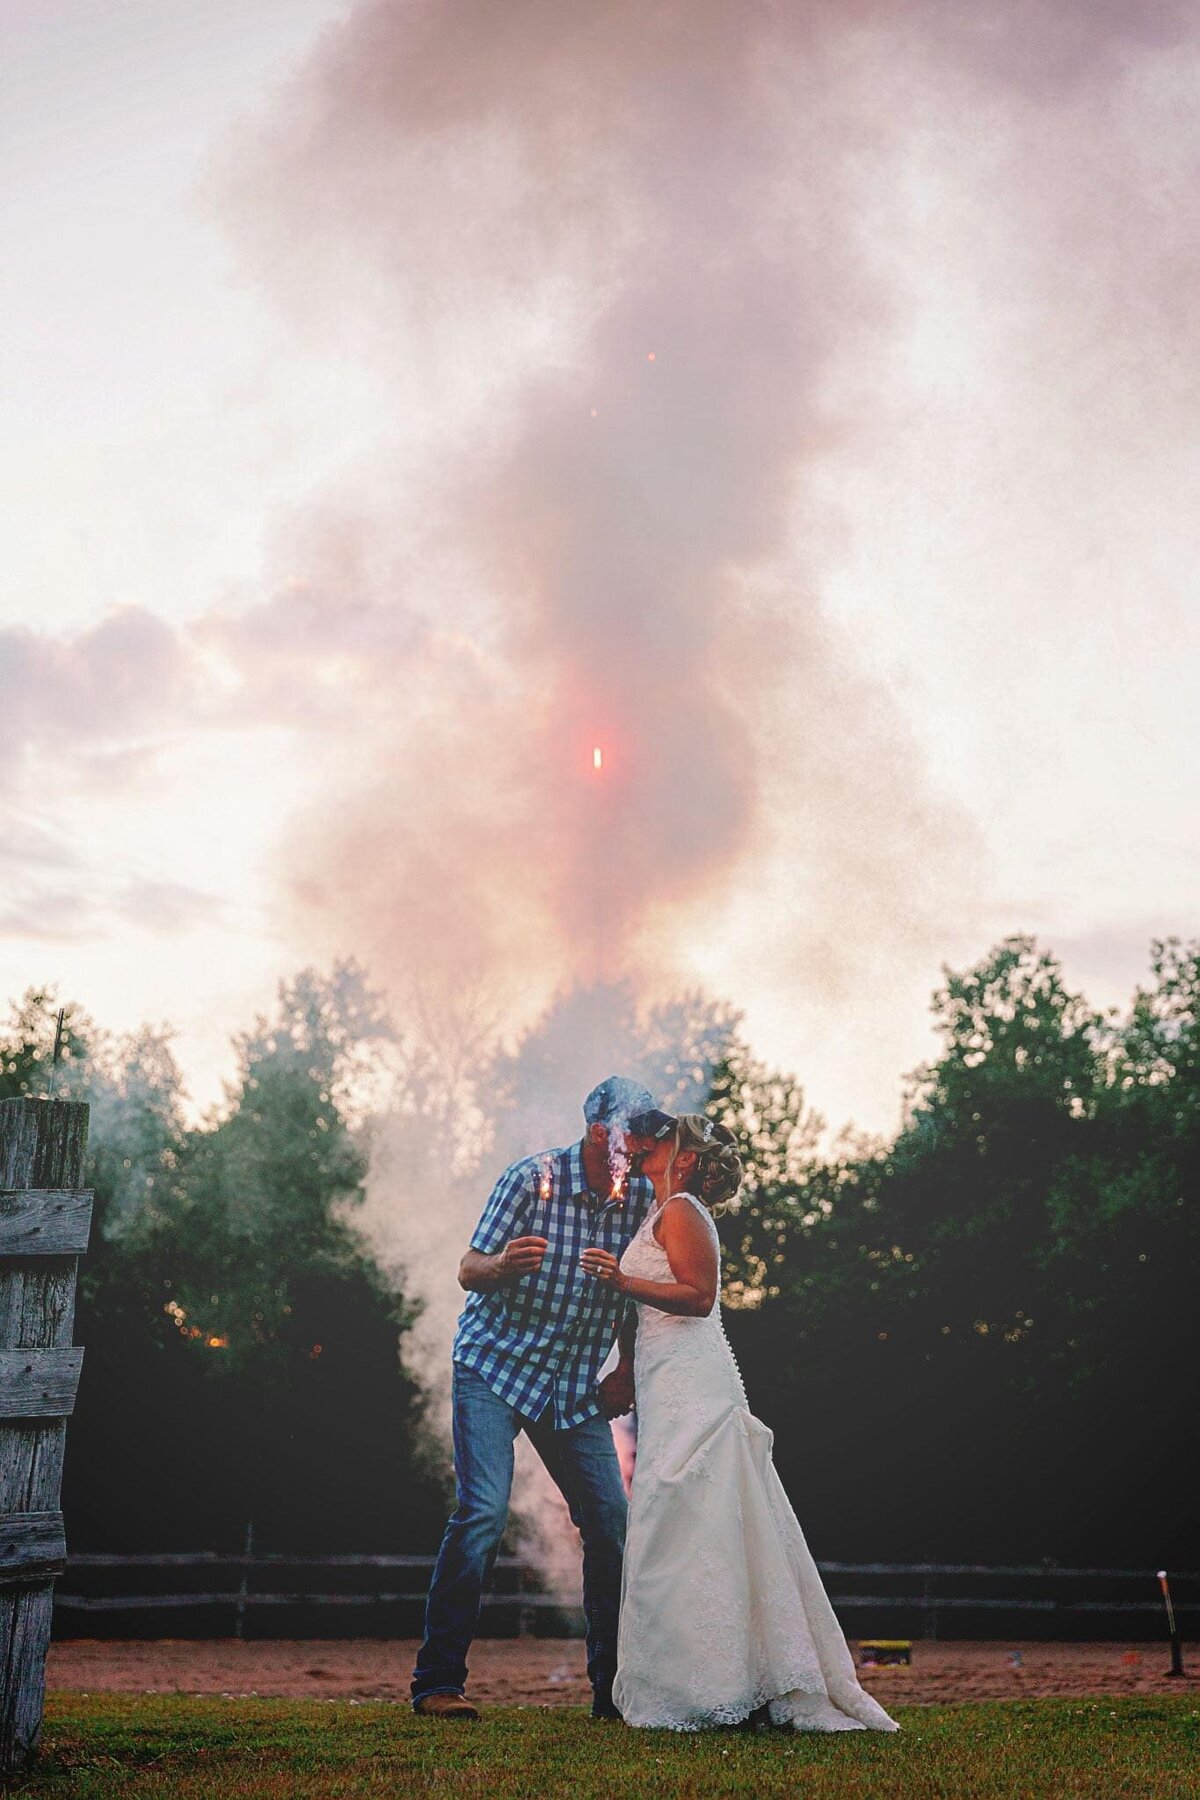 Wausau Wedding photographer shares wedding photography